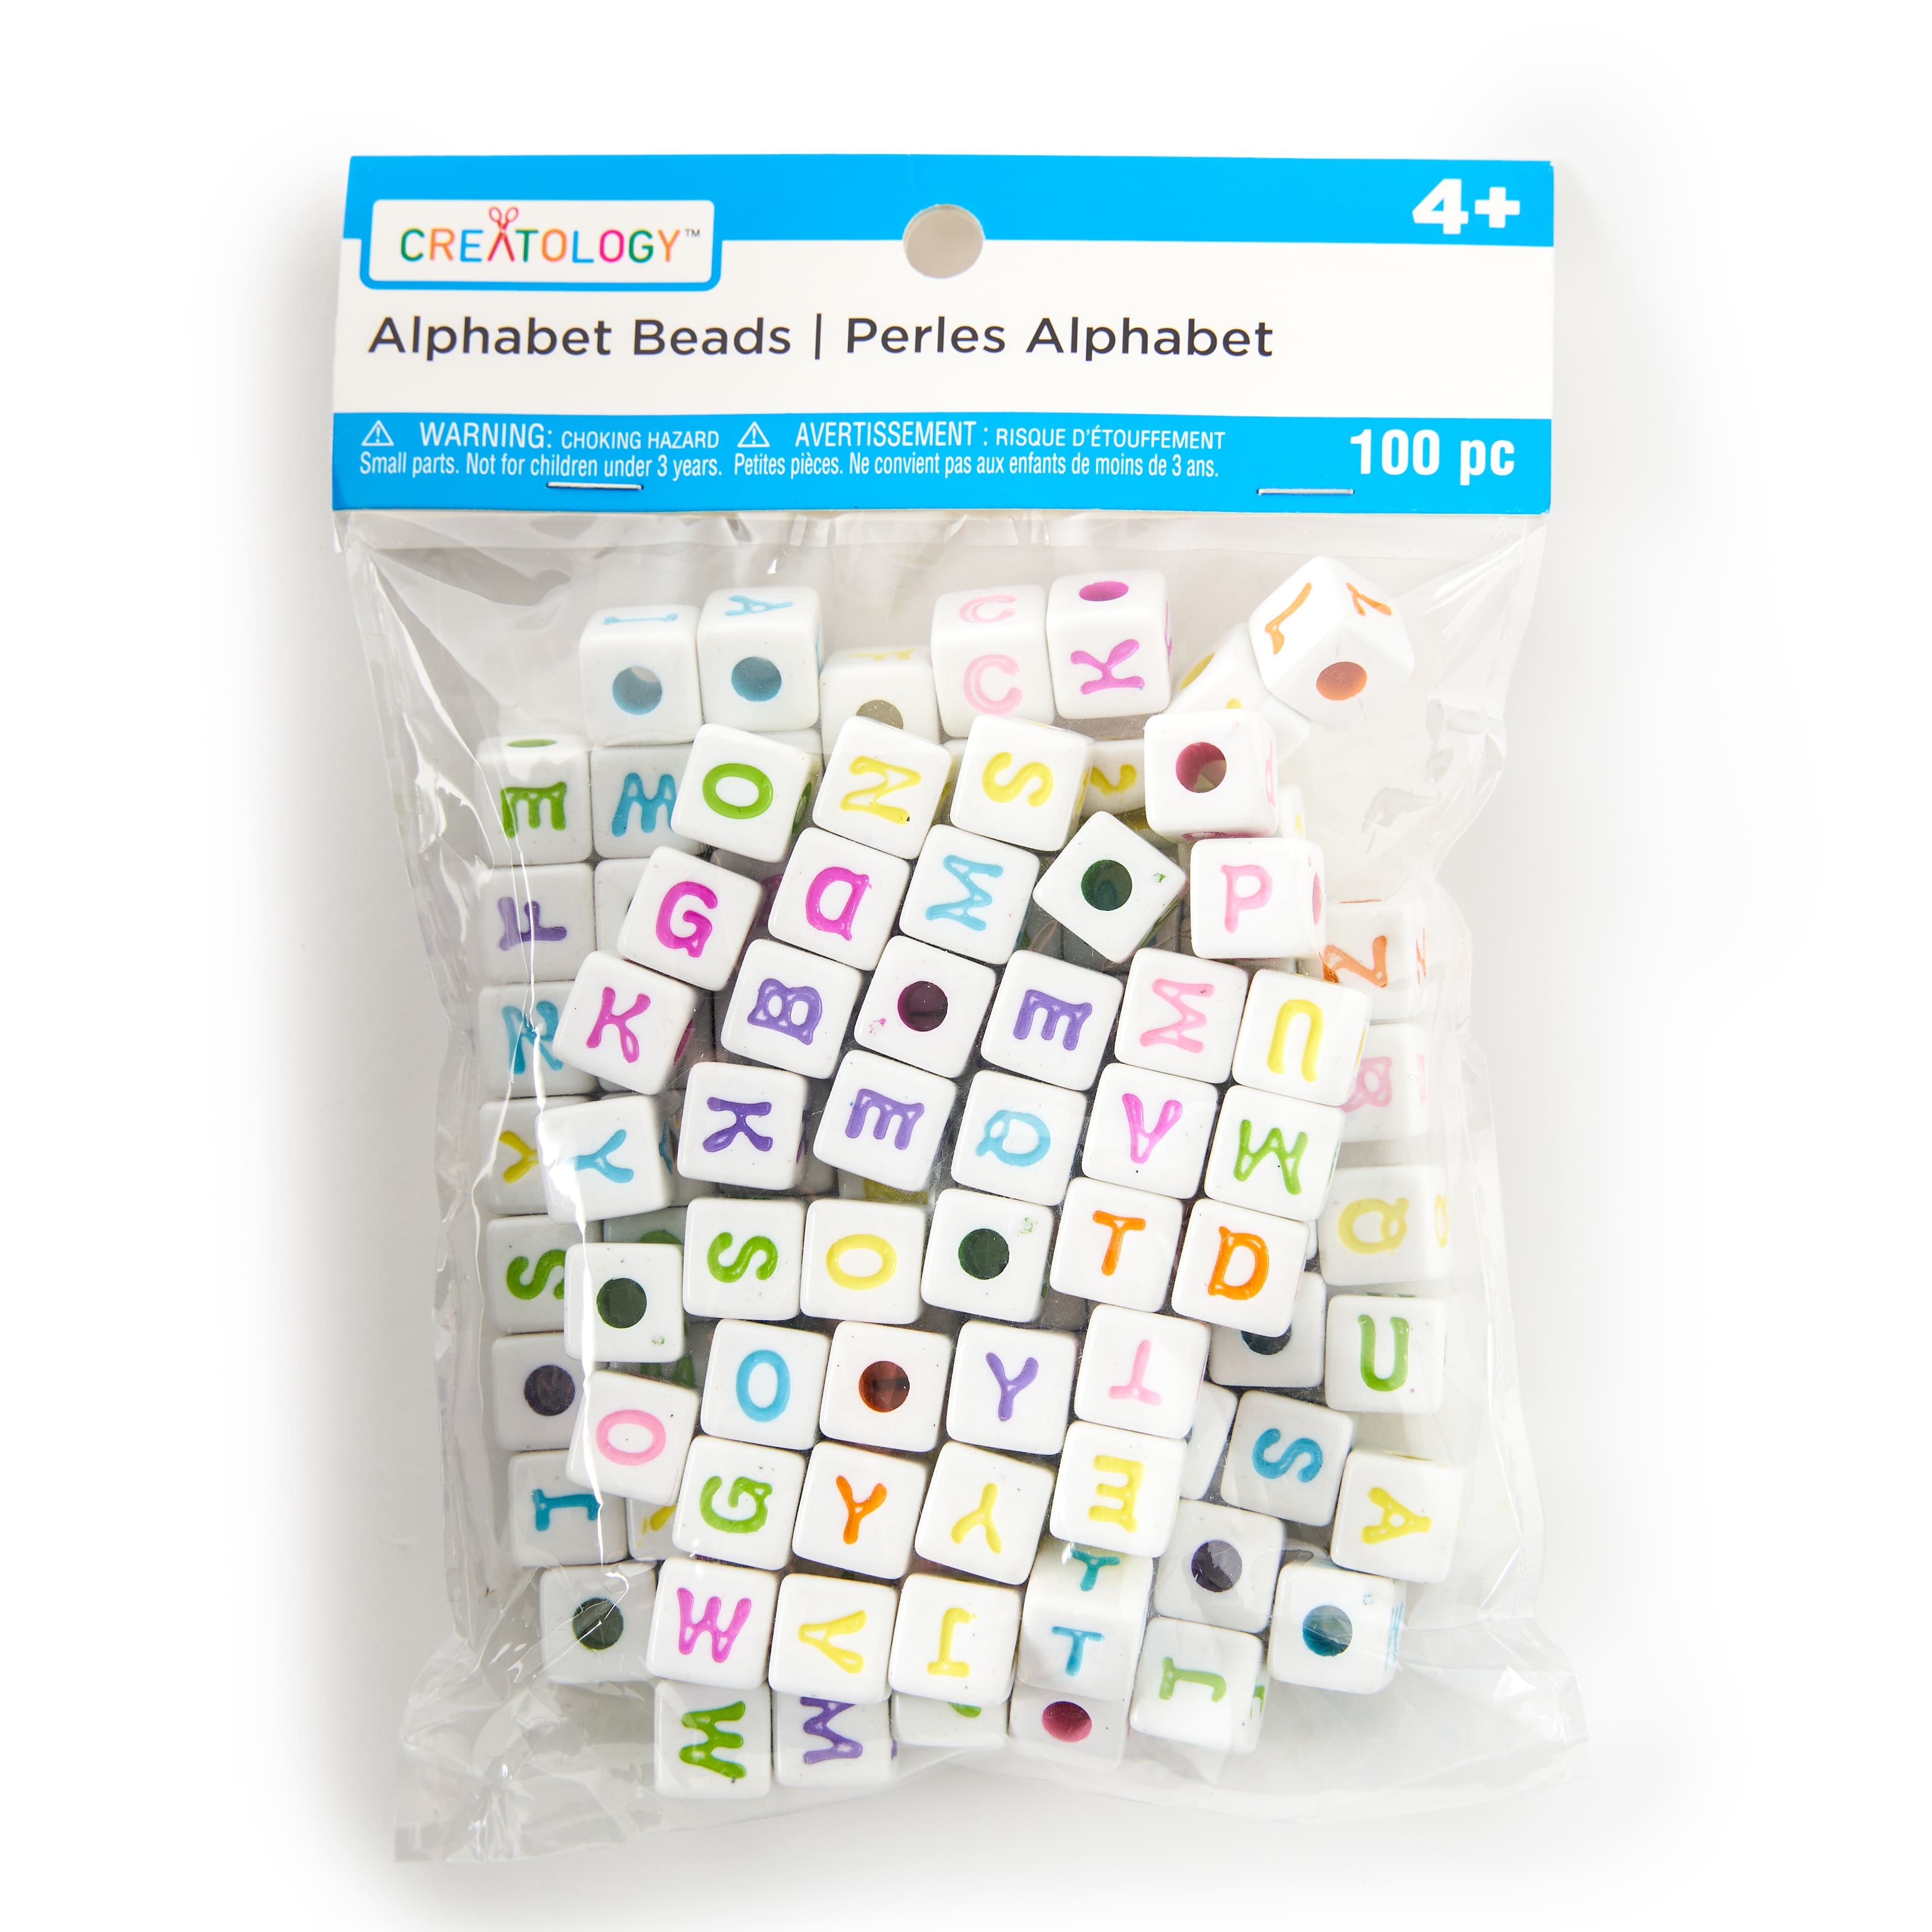 TOAOB 1200pcs 4 Colors Cube Letter Beads Acrylic India